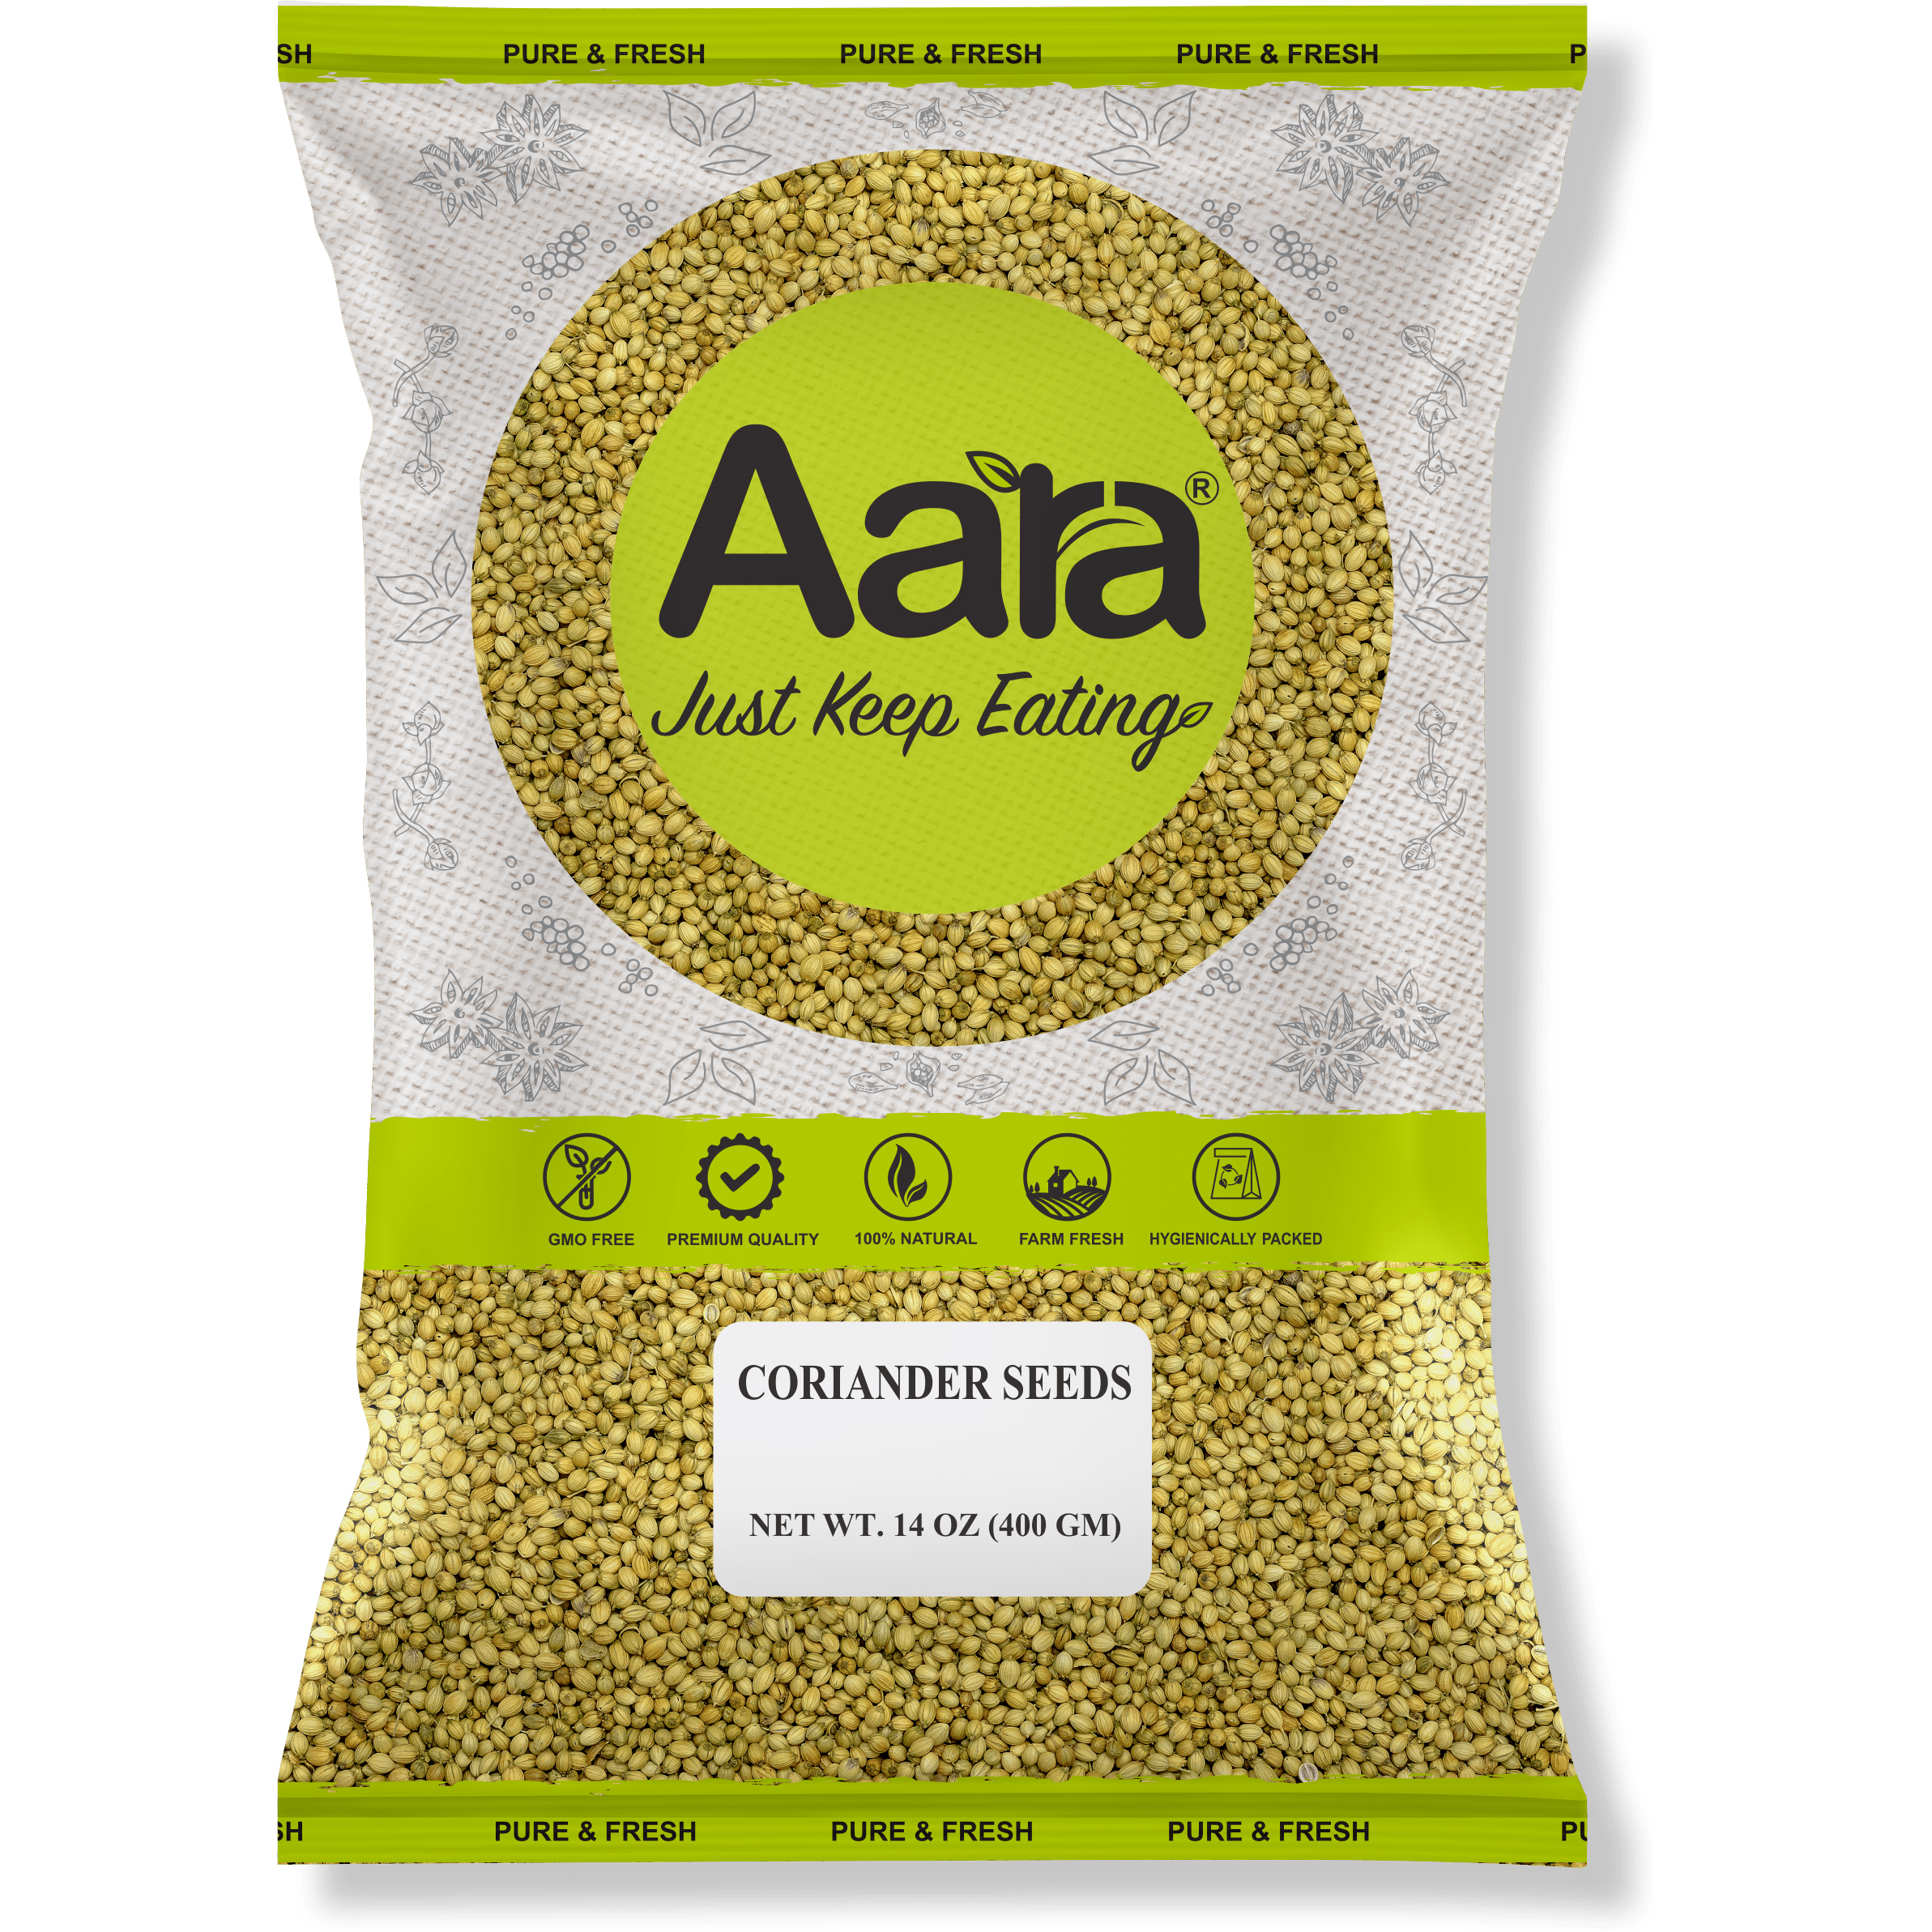 Aara Coriander Seeds - 14 oz